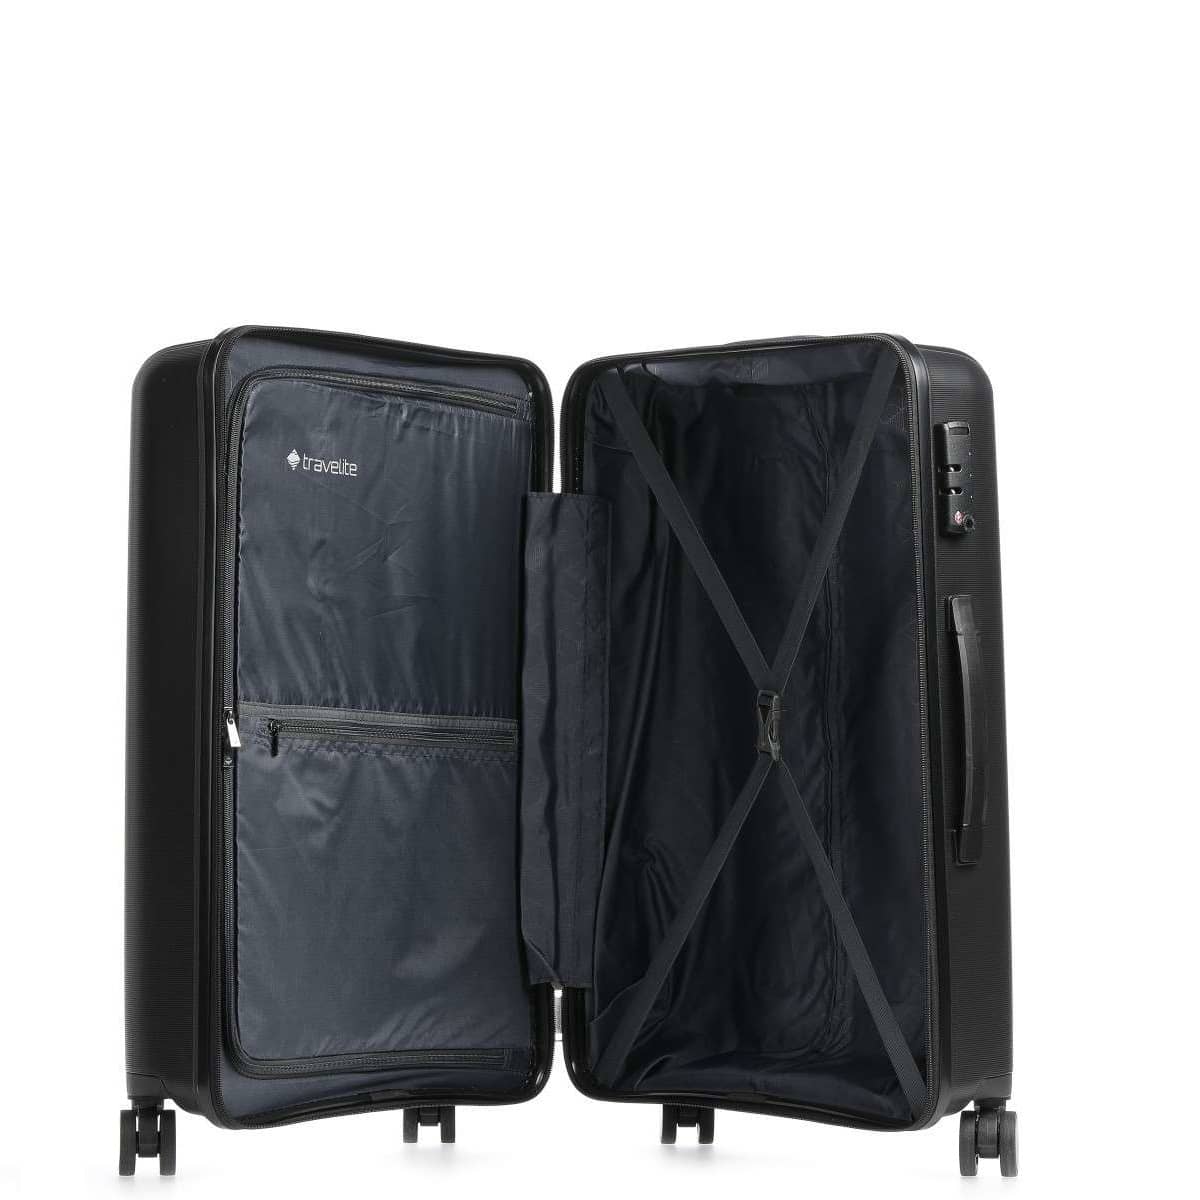 travelite-vaka-suitcase-set-4-wheels-black-76440-01-35